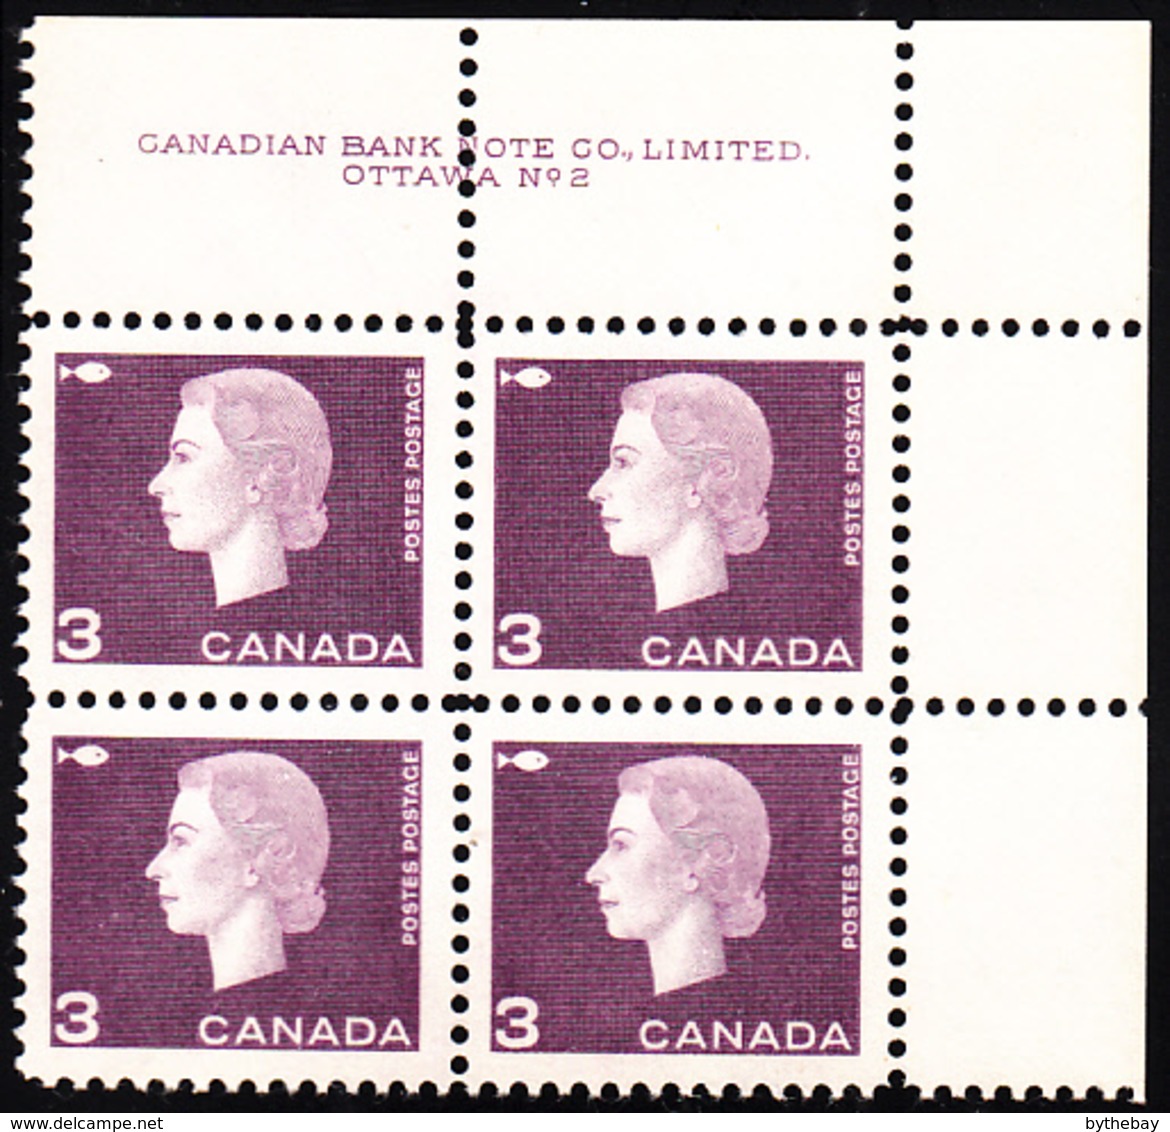 Canada 1963 MNH Sc #403 3c QEII Cameo Purple Plate #2 UR - Plate Number & Inscriptions